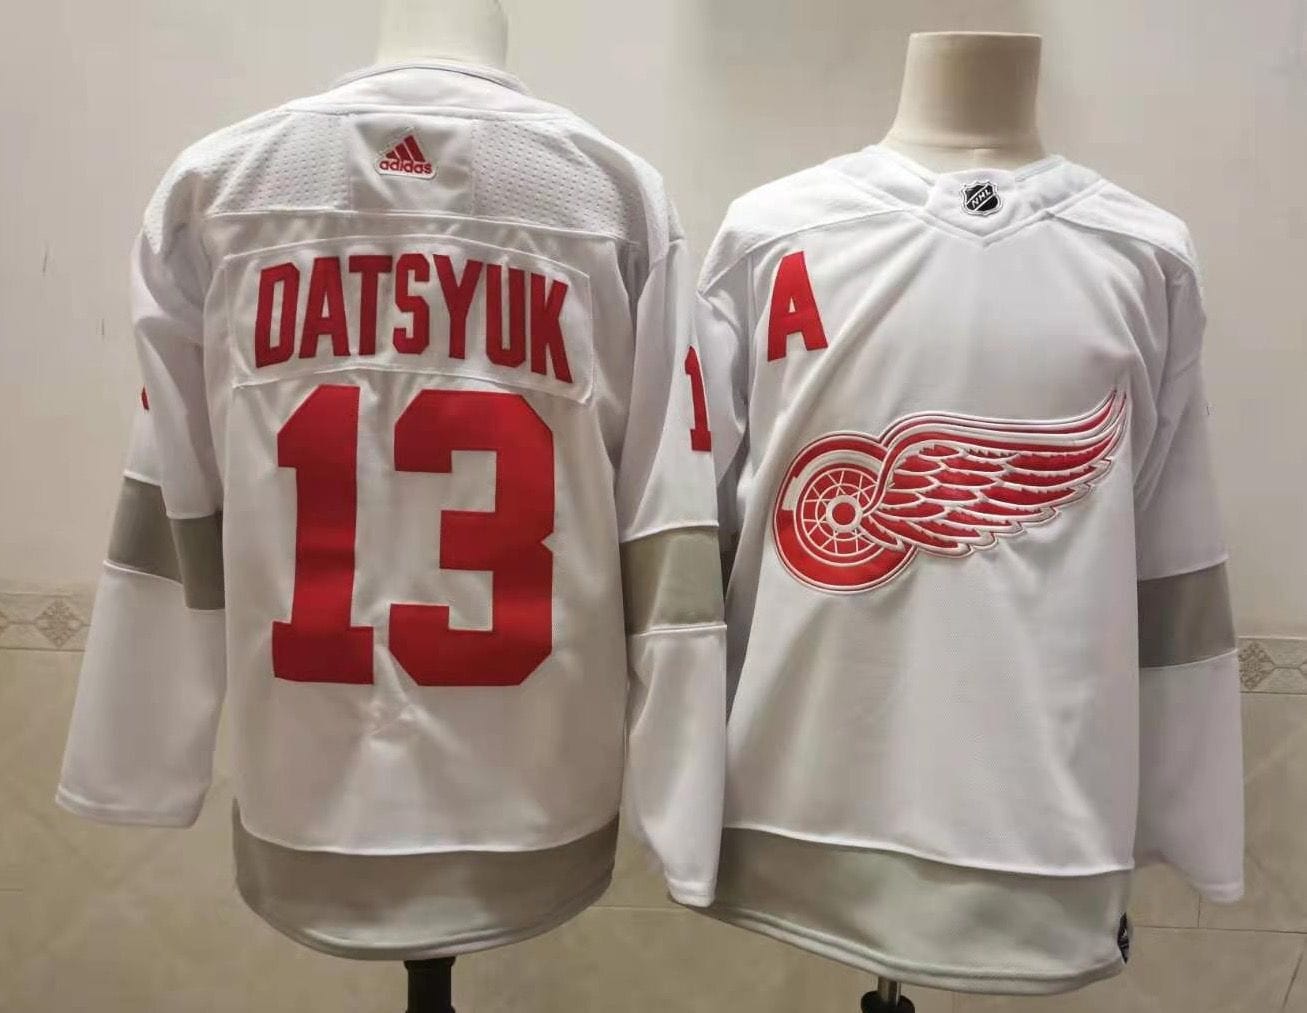 NHL Detroit Red Wings DATSYUK # 13 Jersey